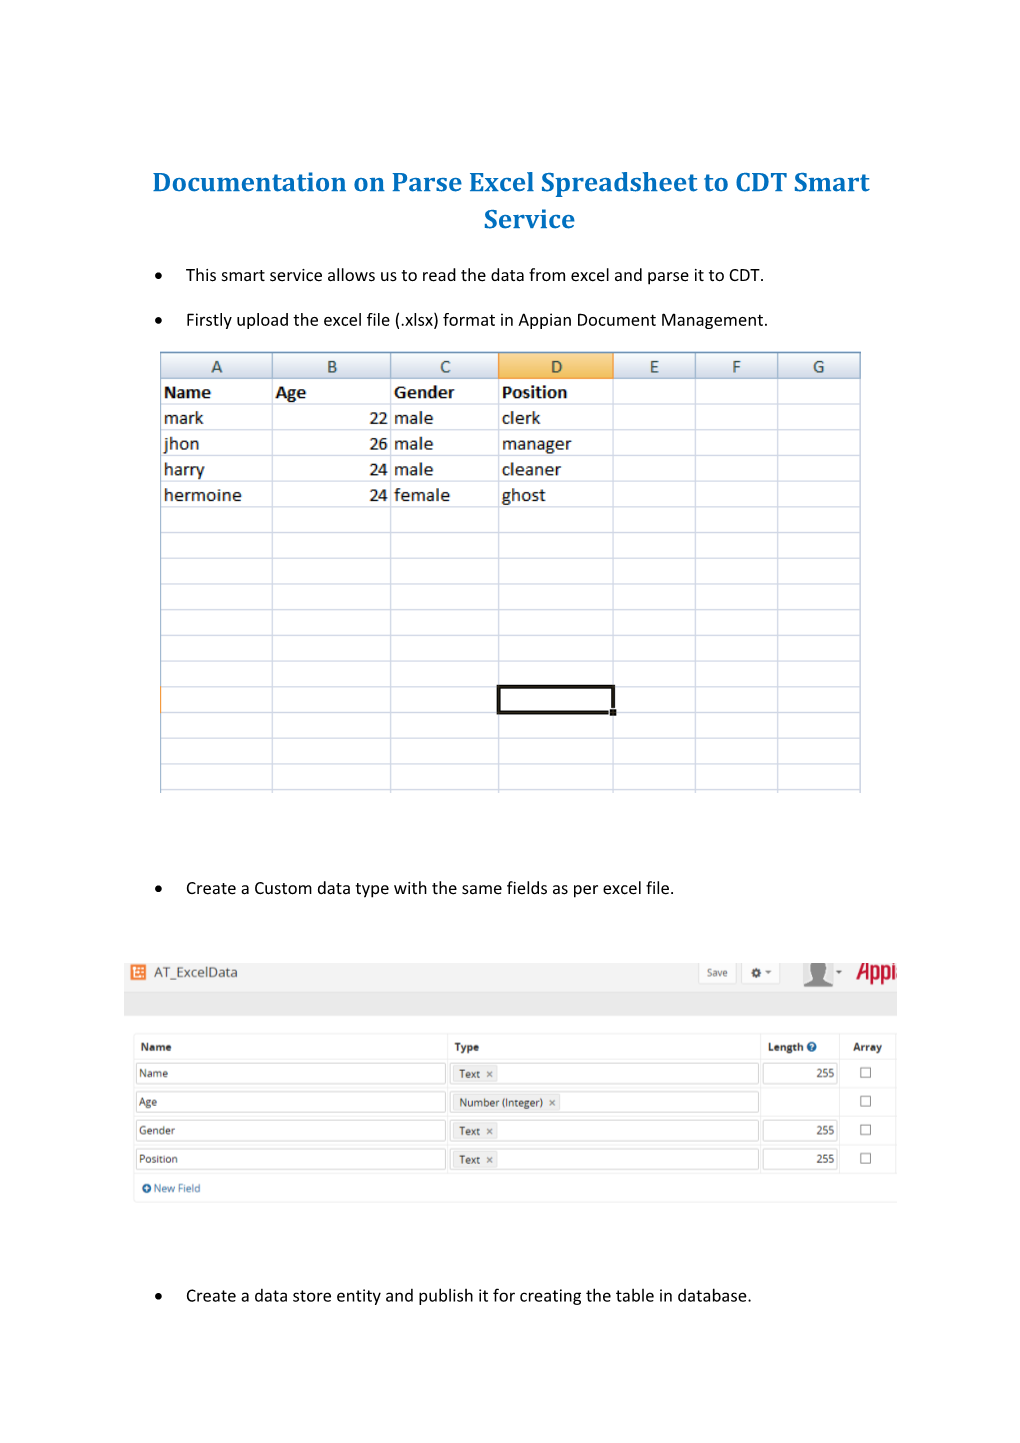 Documentation on Parse Excel Spreadsheet to CDT Smart Service